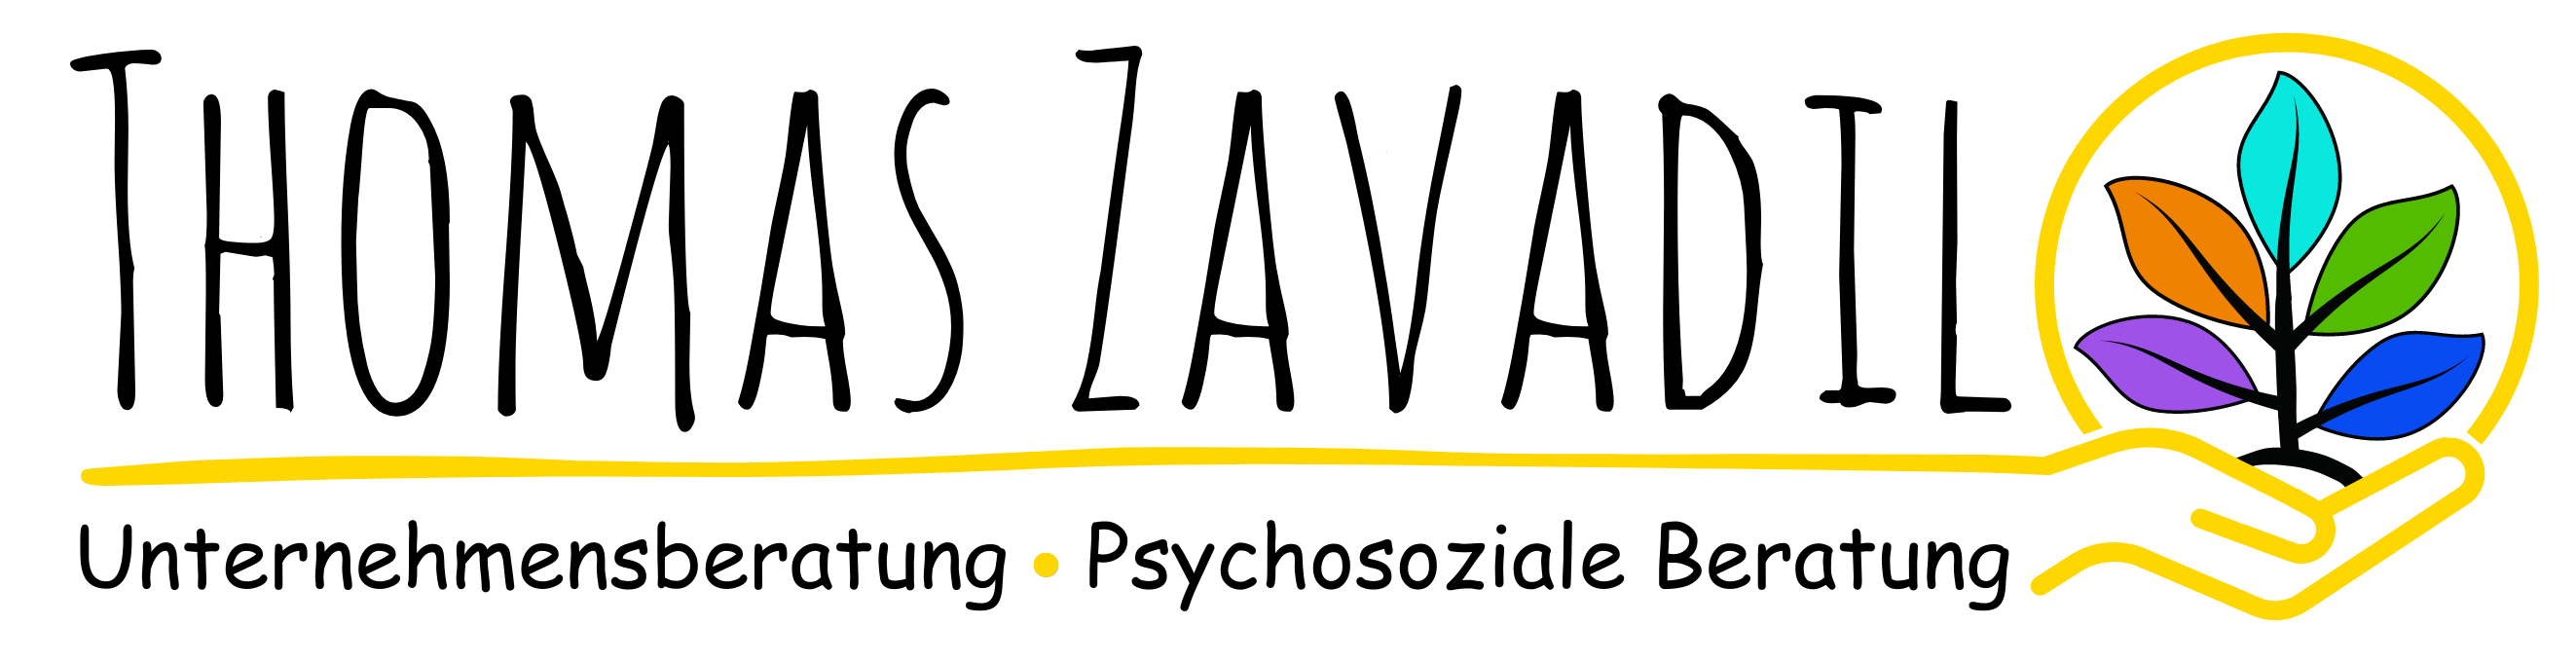 Logo Thomas Zavadil, Unternehmensberatung, Psychosoziale Beratung, Raum für Bewusstsein, Transformation